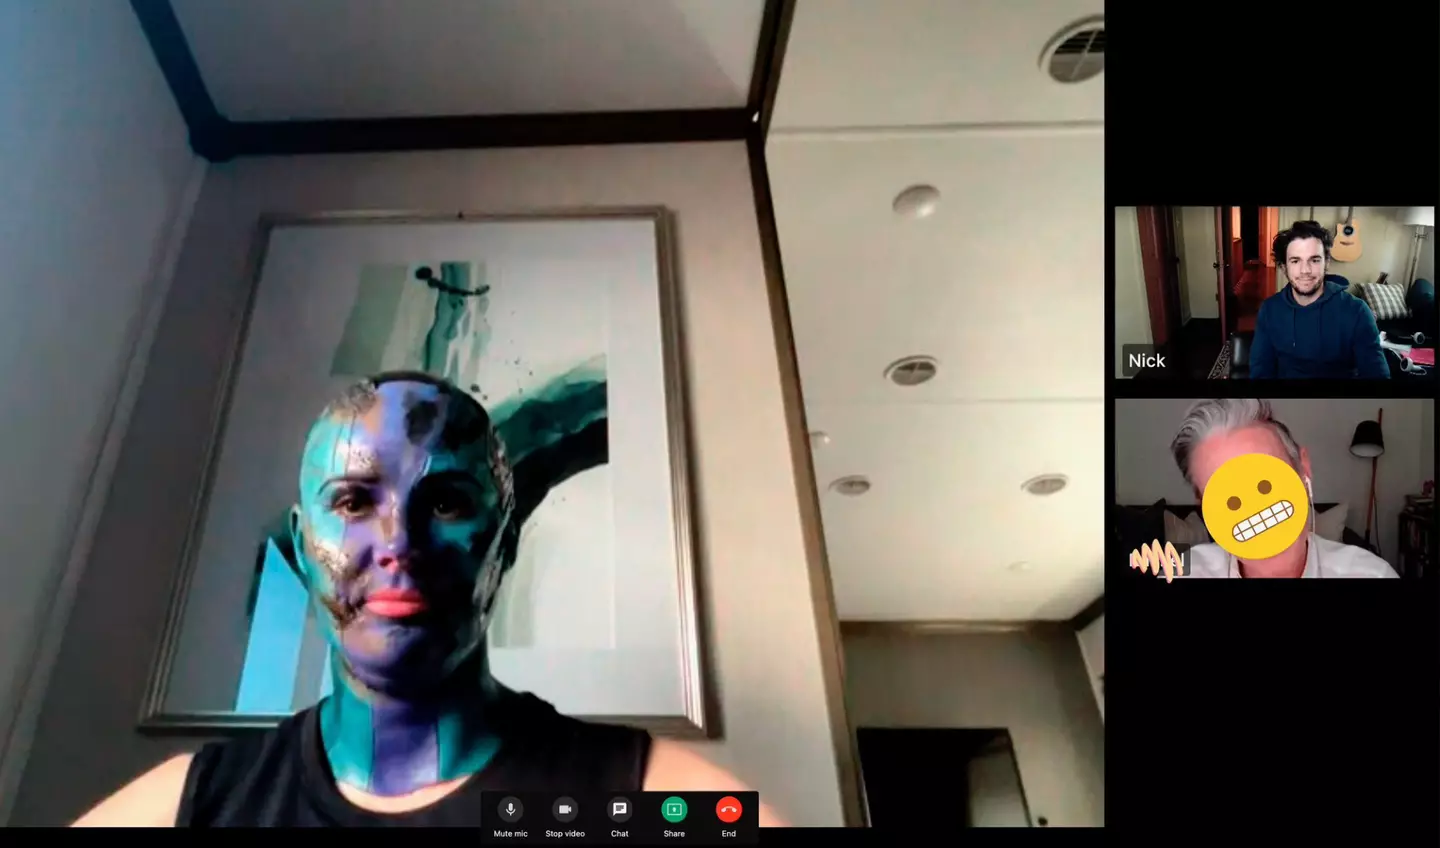 Karen Gillan appeared on the Zoom call in full Nebula makeup.